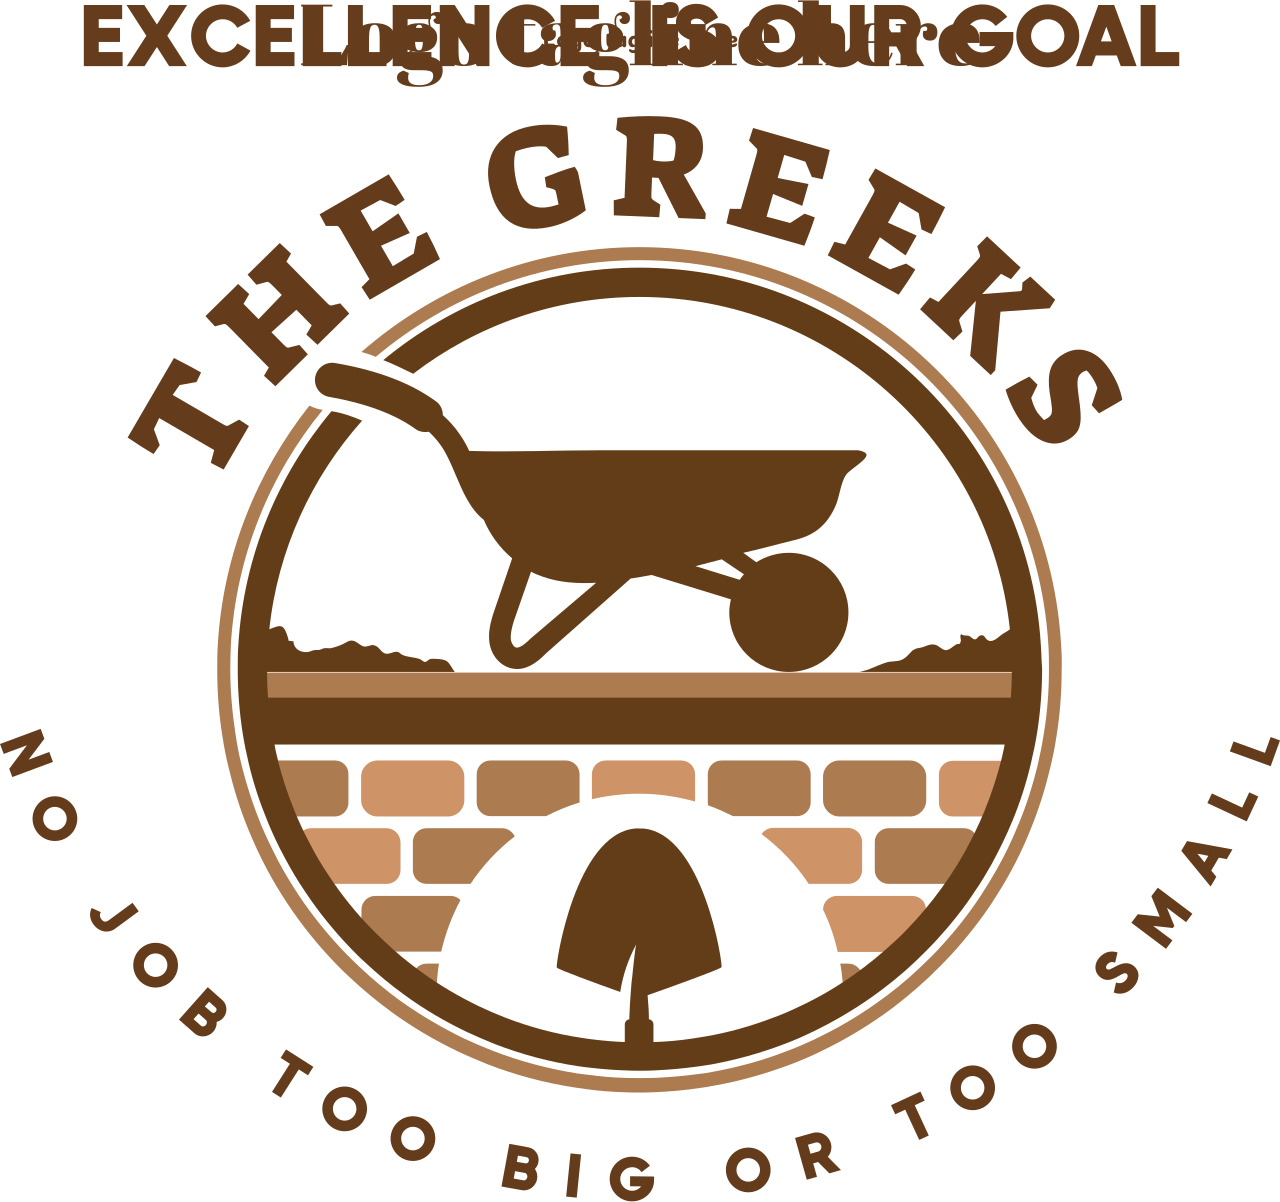 THE GREEKS 's logo